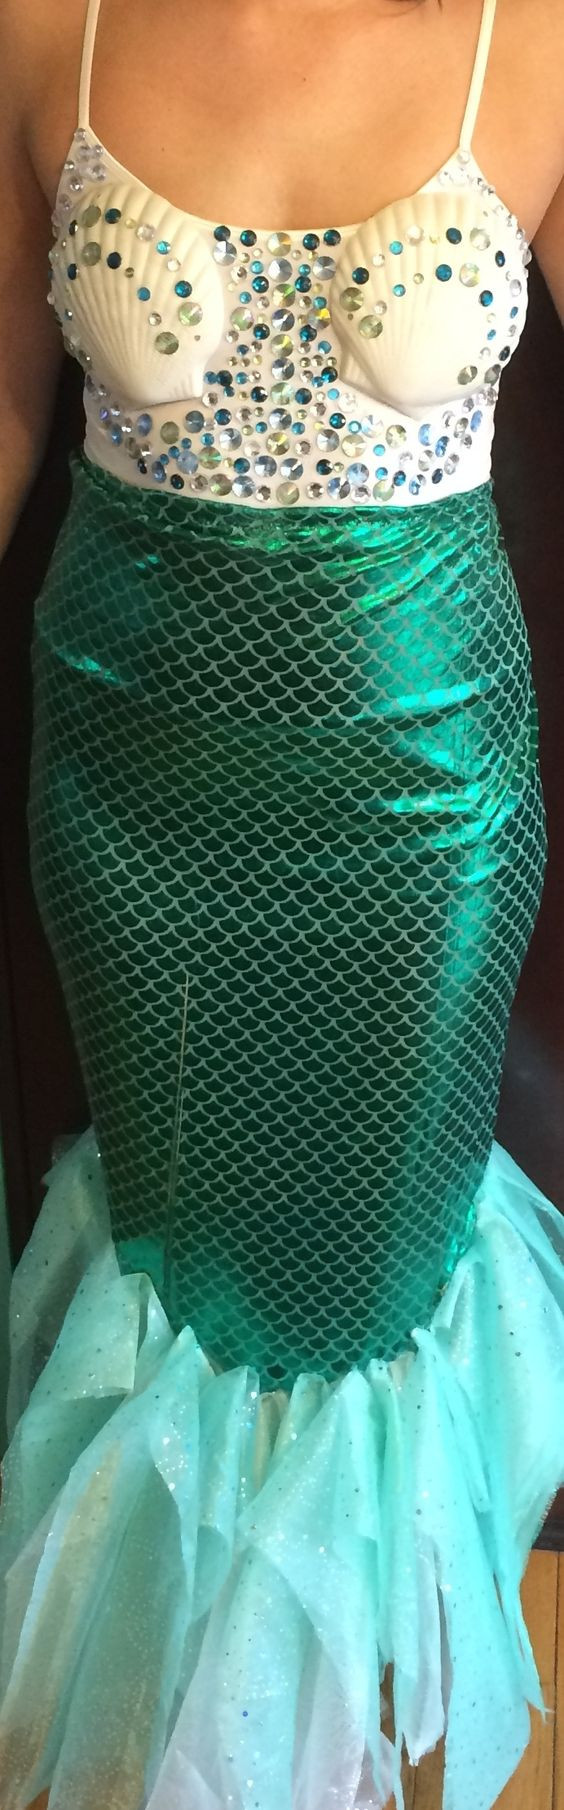 Best ideas about Mermaid Halloween Costumes DIY
. Save or Pin 25 Mermaid Costumes and DIY Ideas 2017 Now.